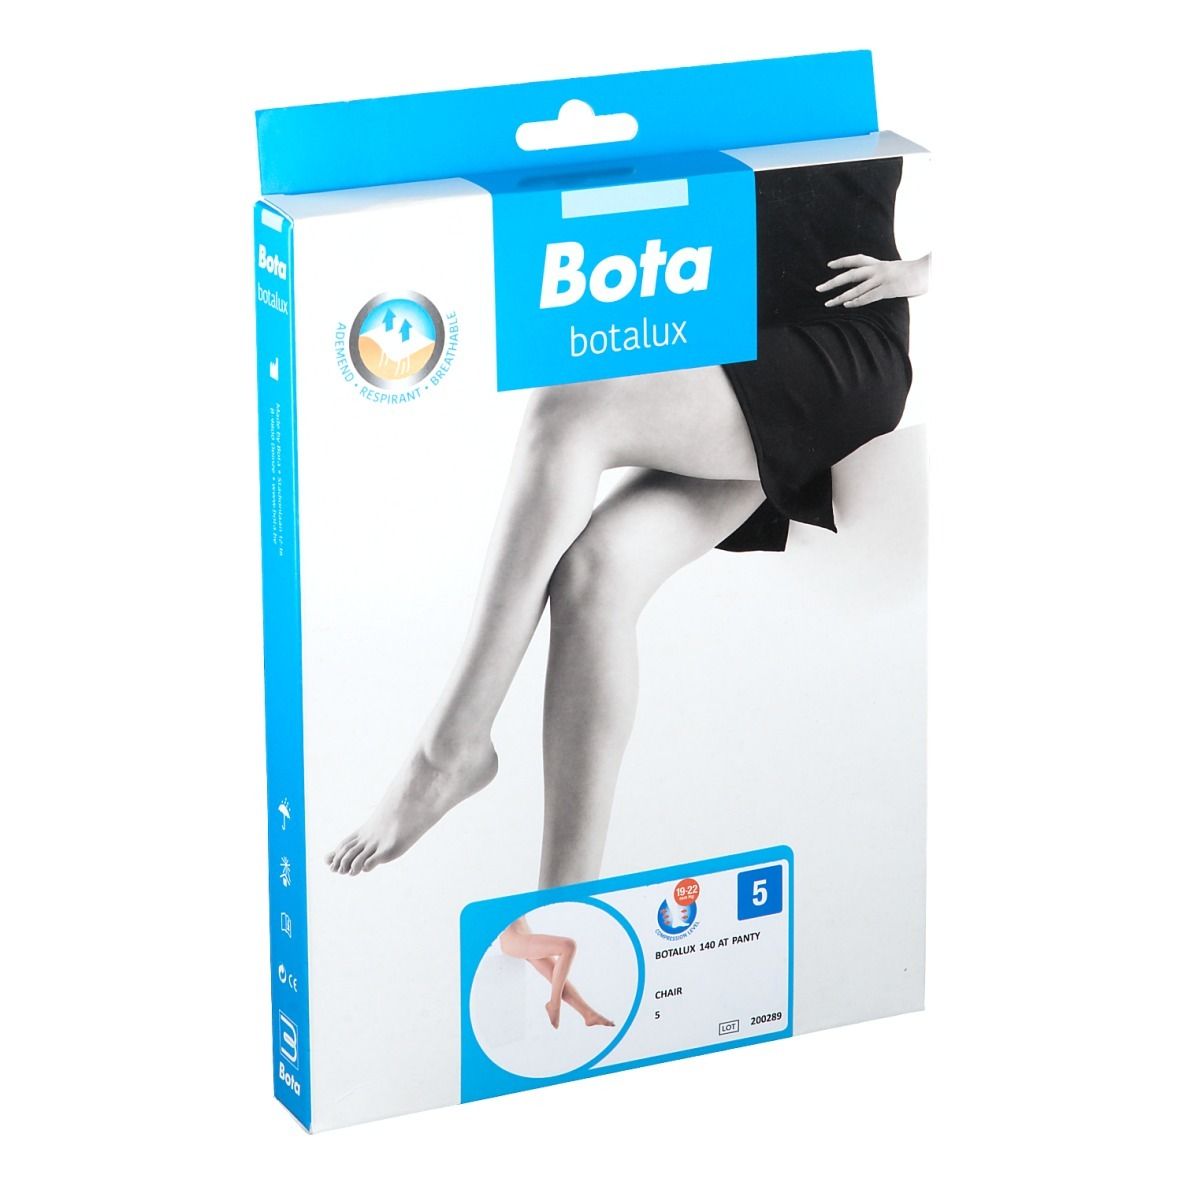 Image of Bota Botalux 140 AT Panty Chair Größe 5